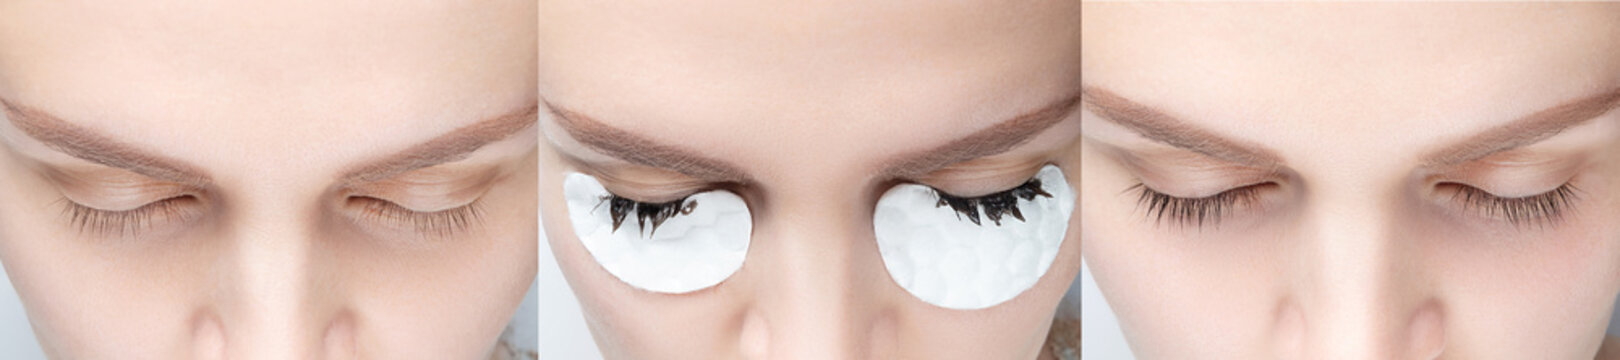 Eyelash tinting before and after. Closeup of womans eyes during eyelash dyeing procedure